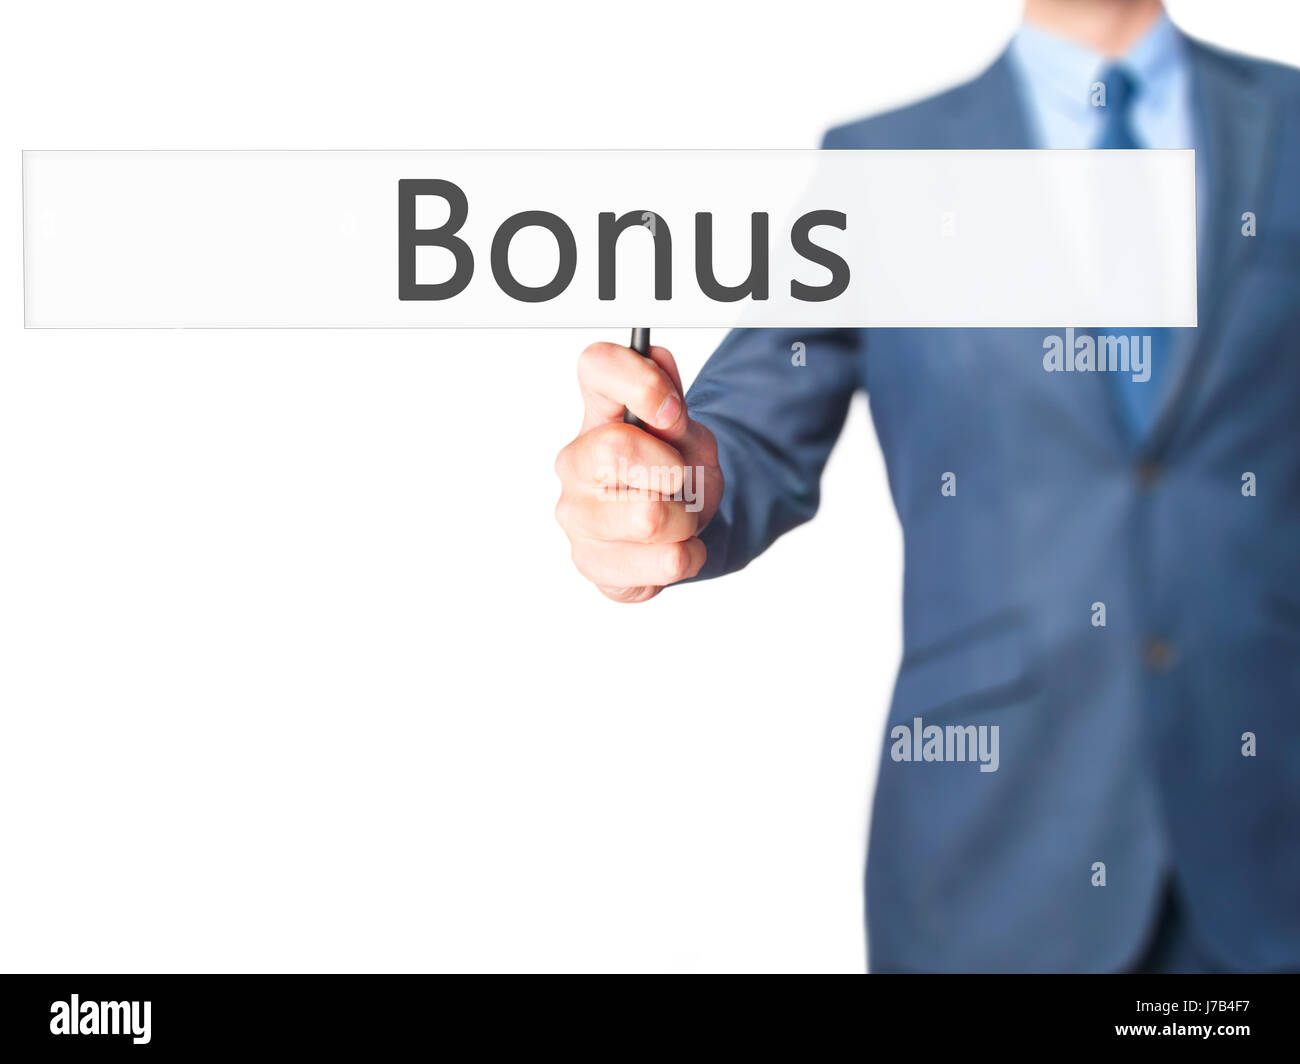 Bonus - Businessman hand holding sign. Business, technology, internet concept. Stock Photo Stock Photo